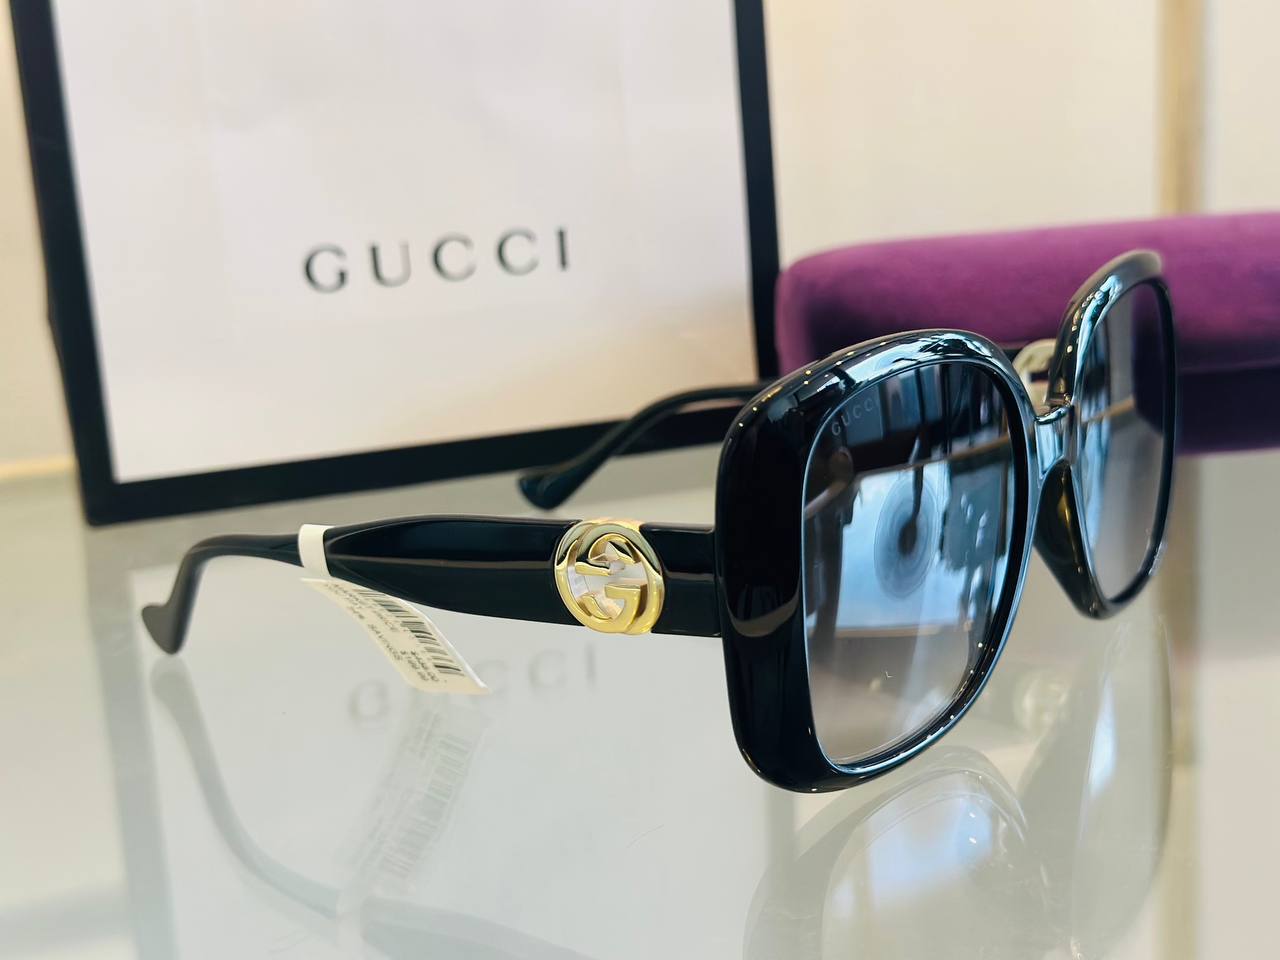 Gucci sunglass